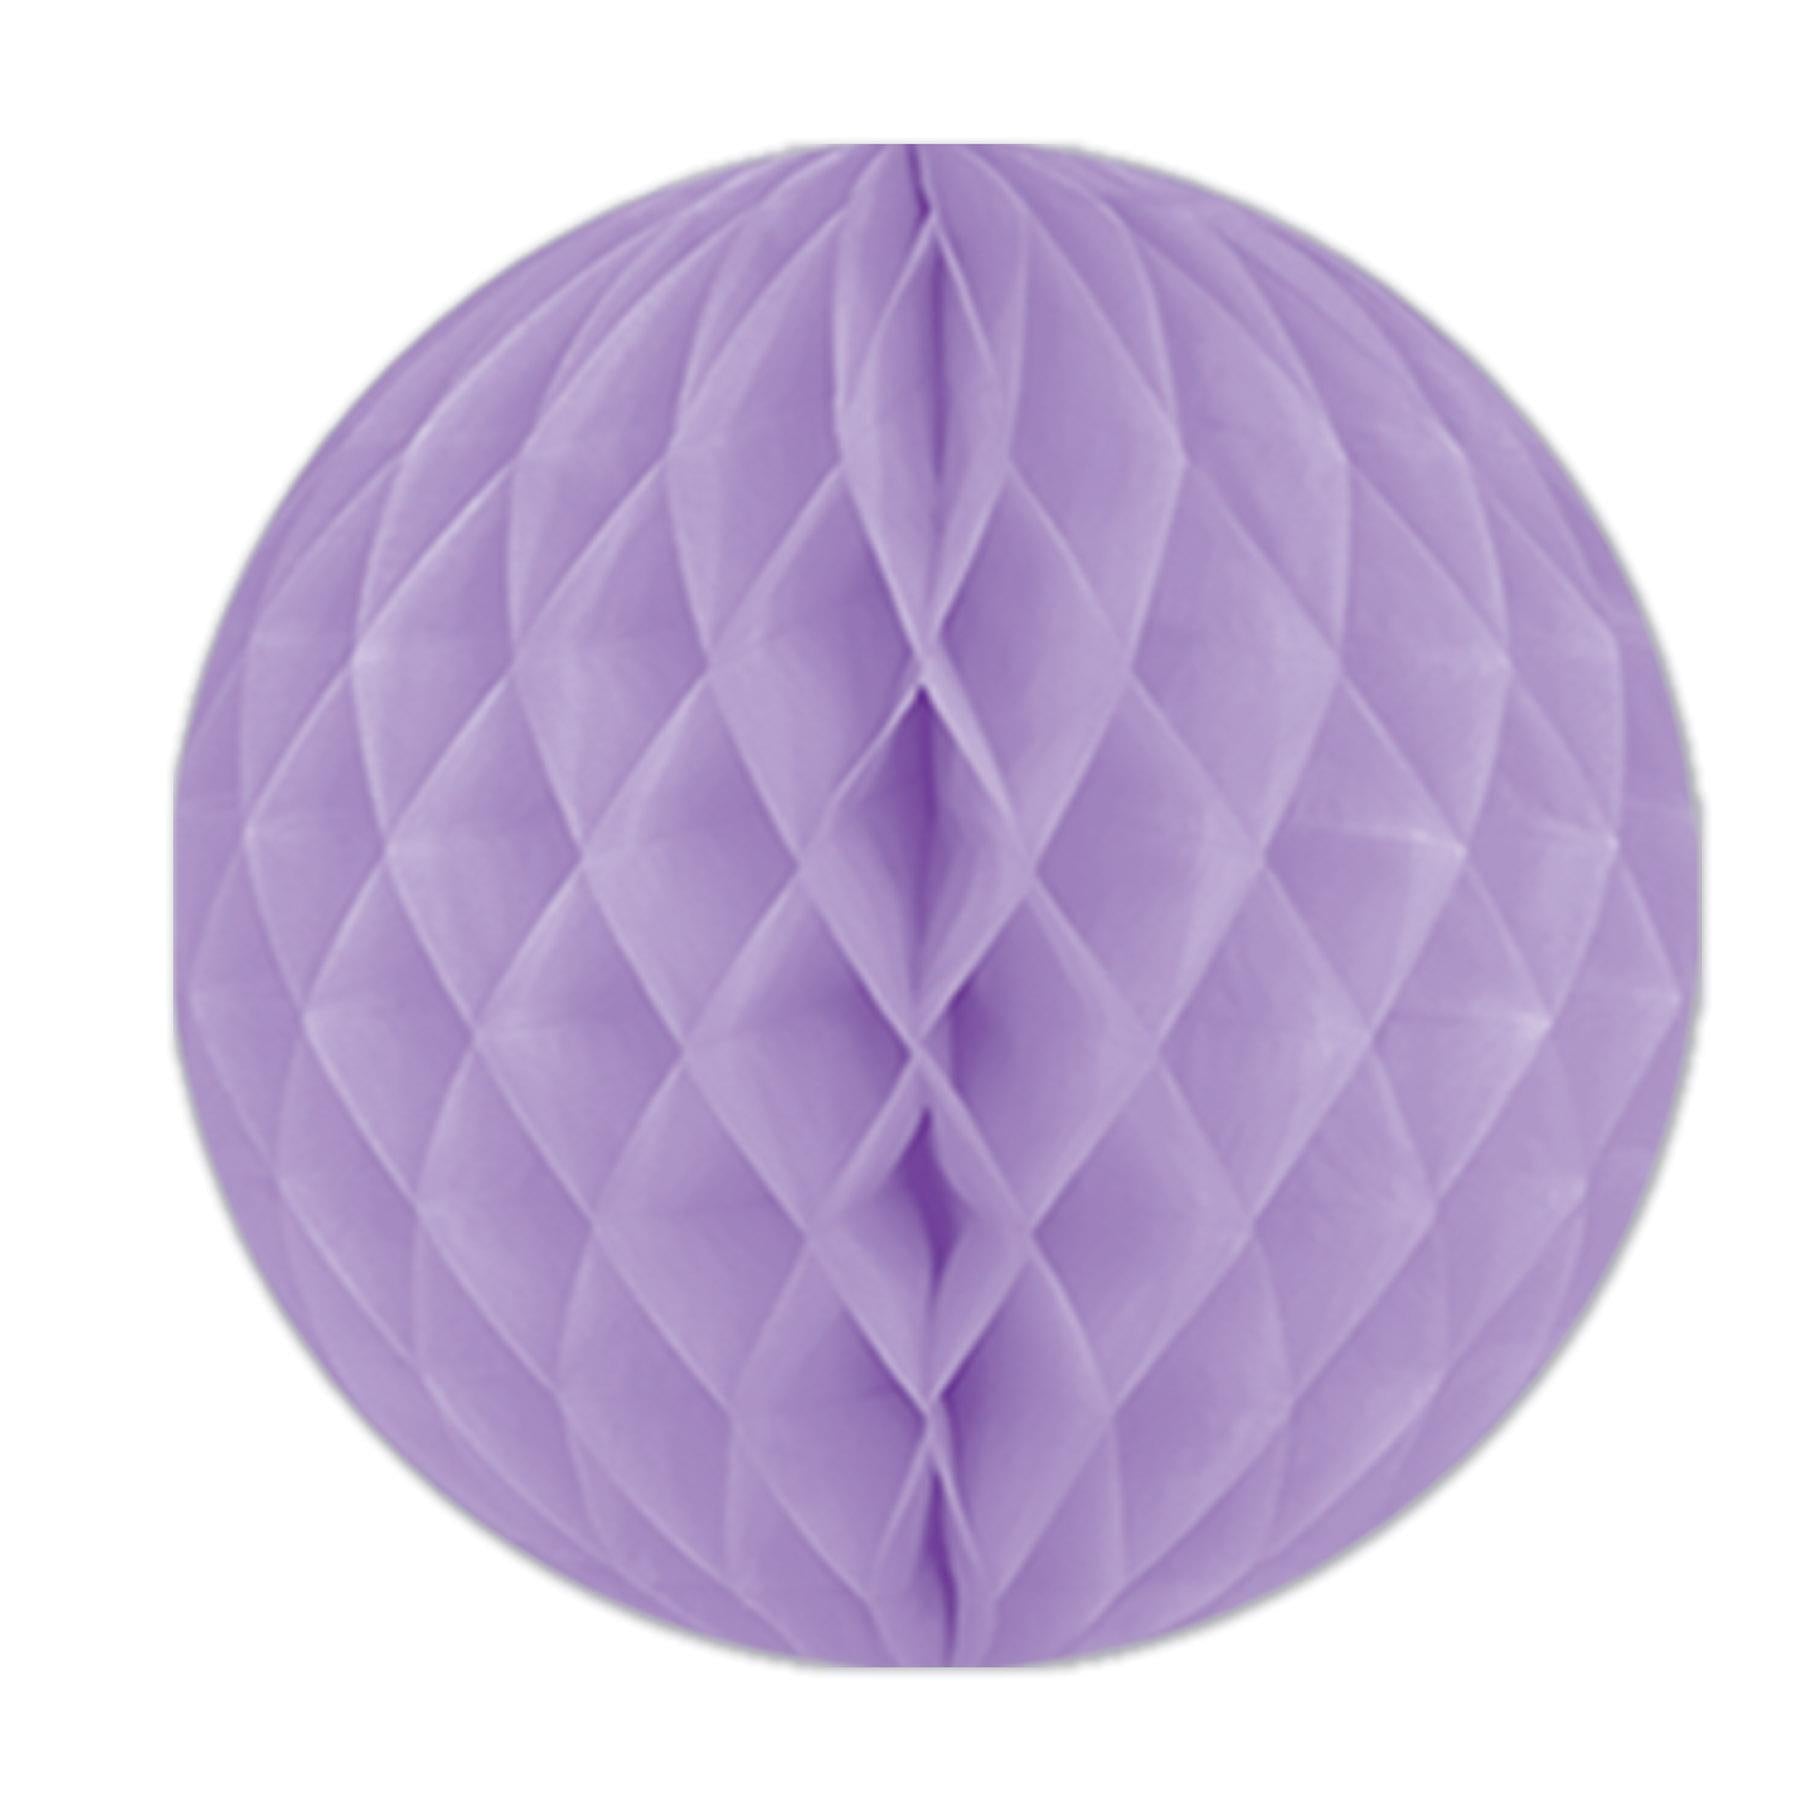 Beistle Party Tissue Ball - lavender